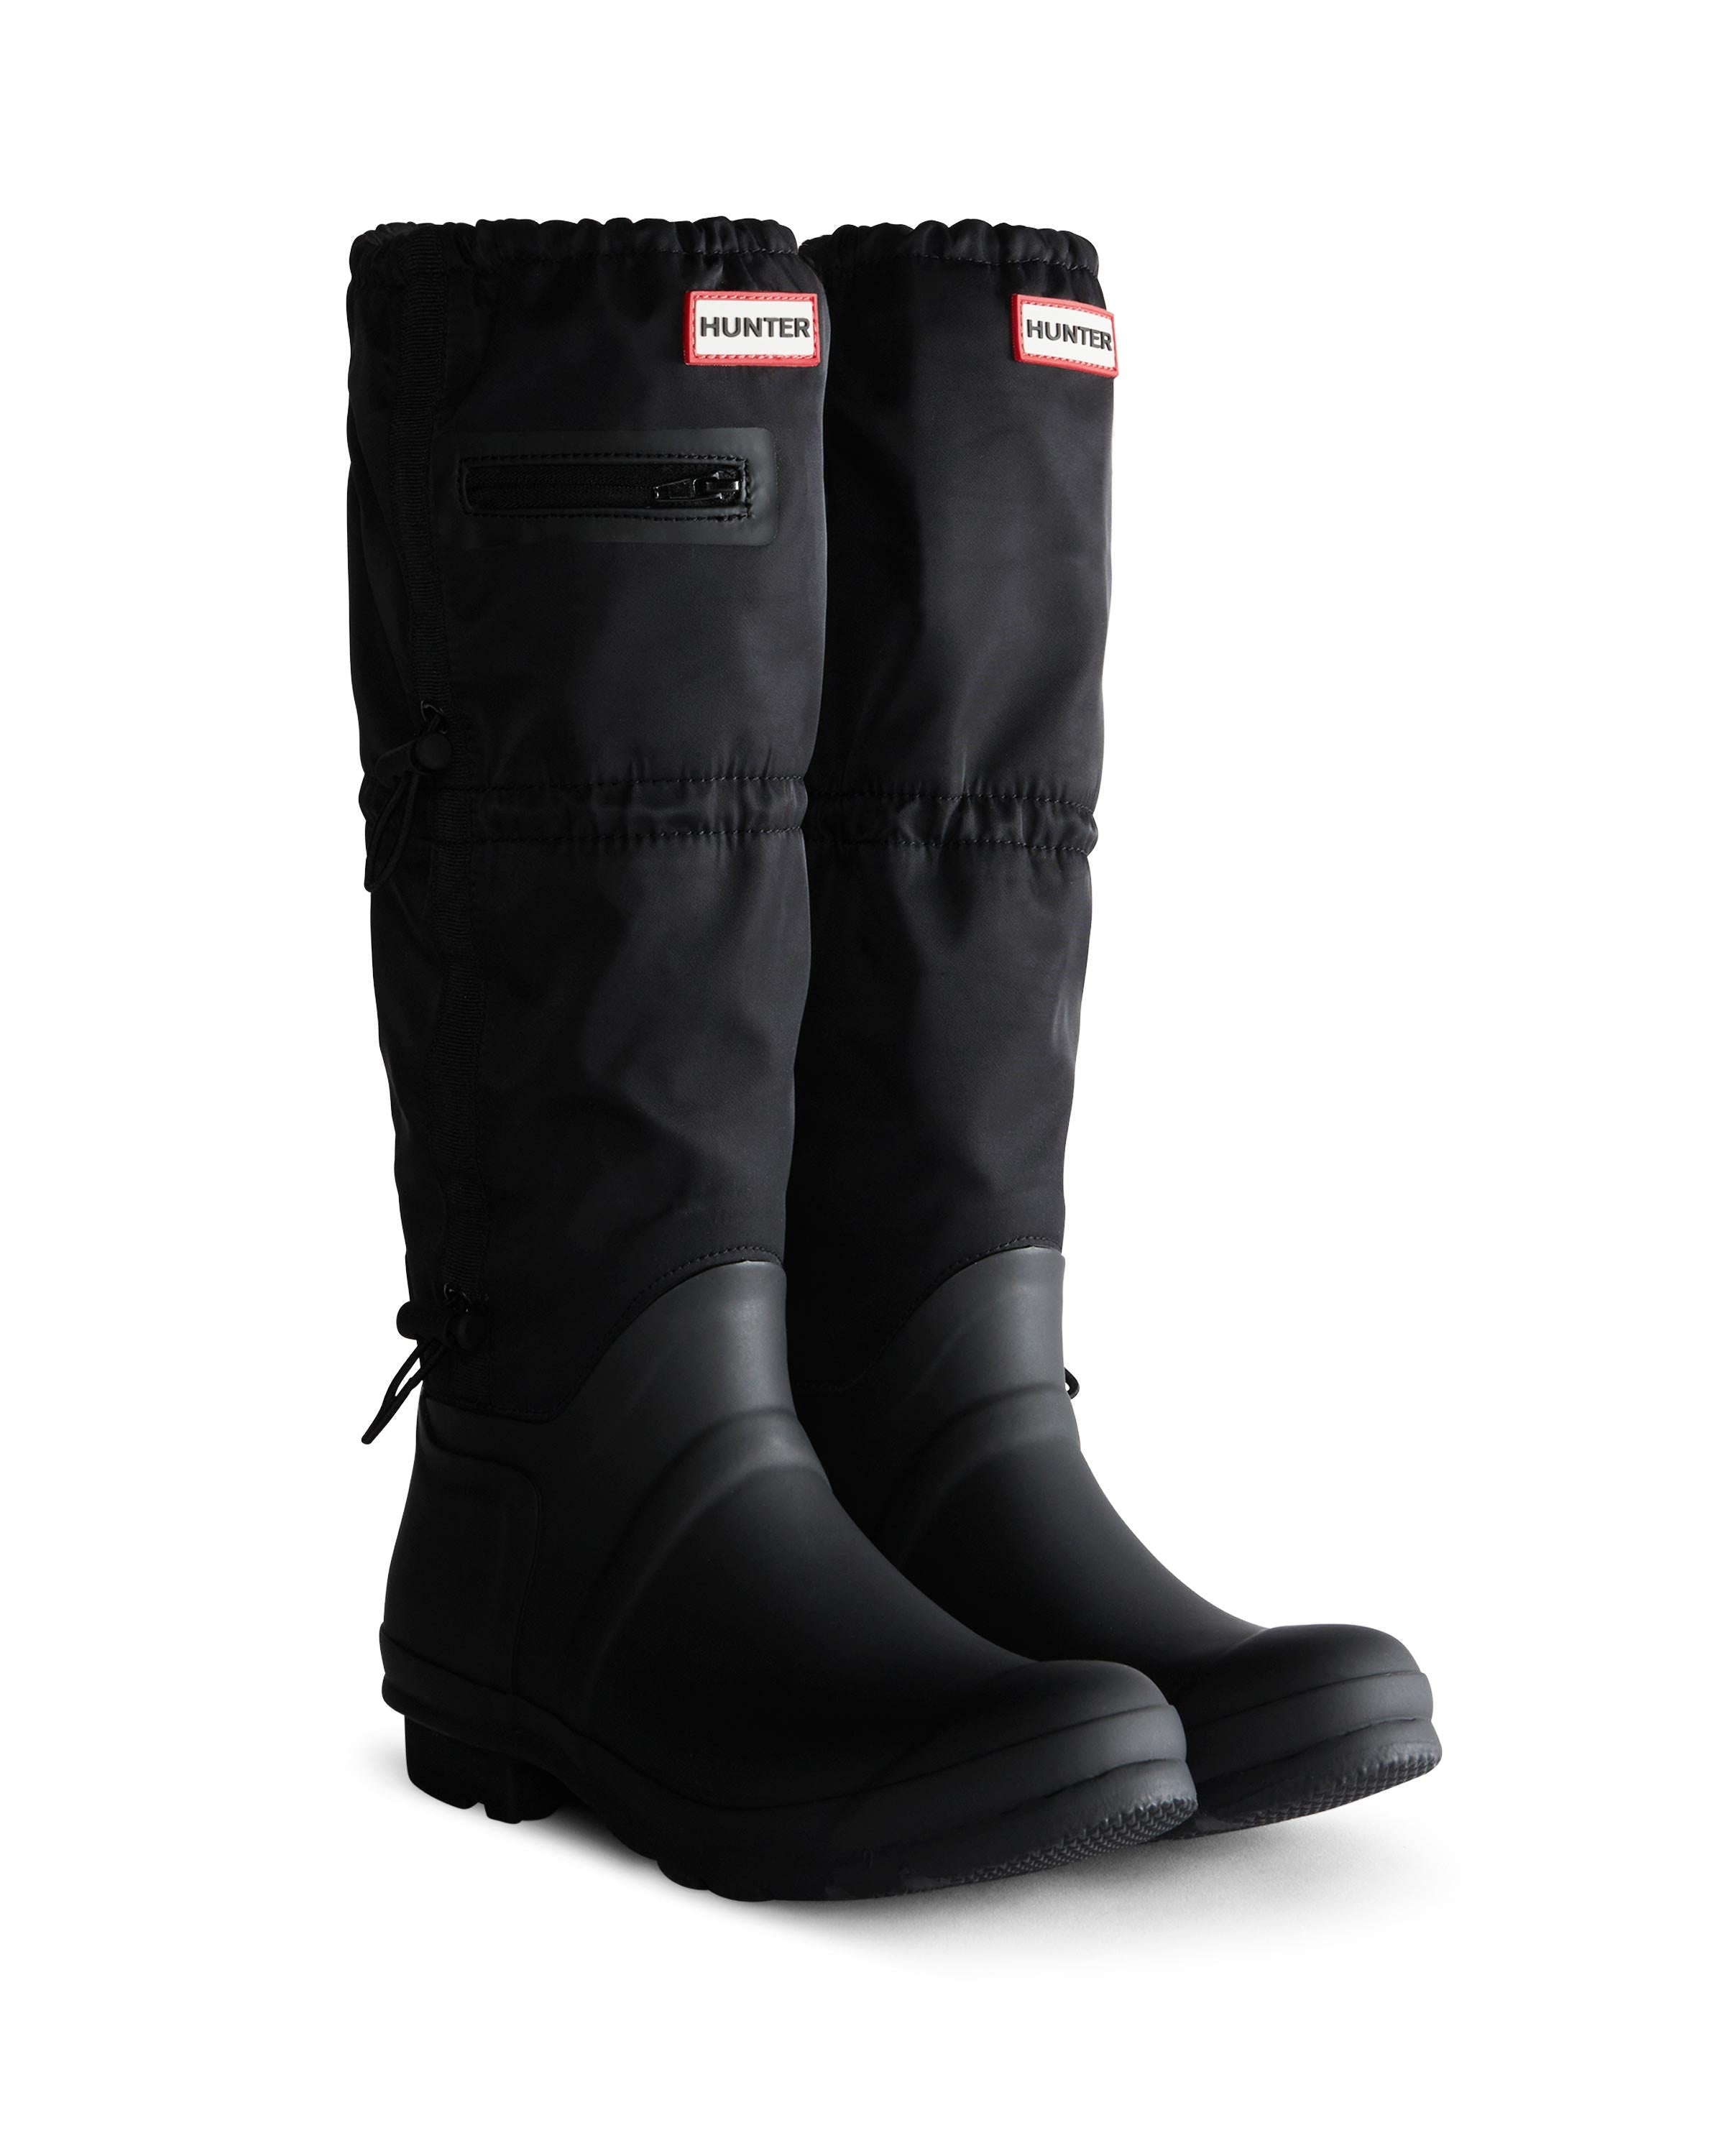 Women's Travel Tall Rain Boots - Black